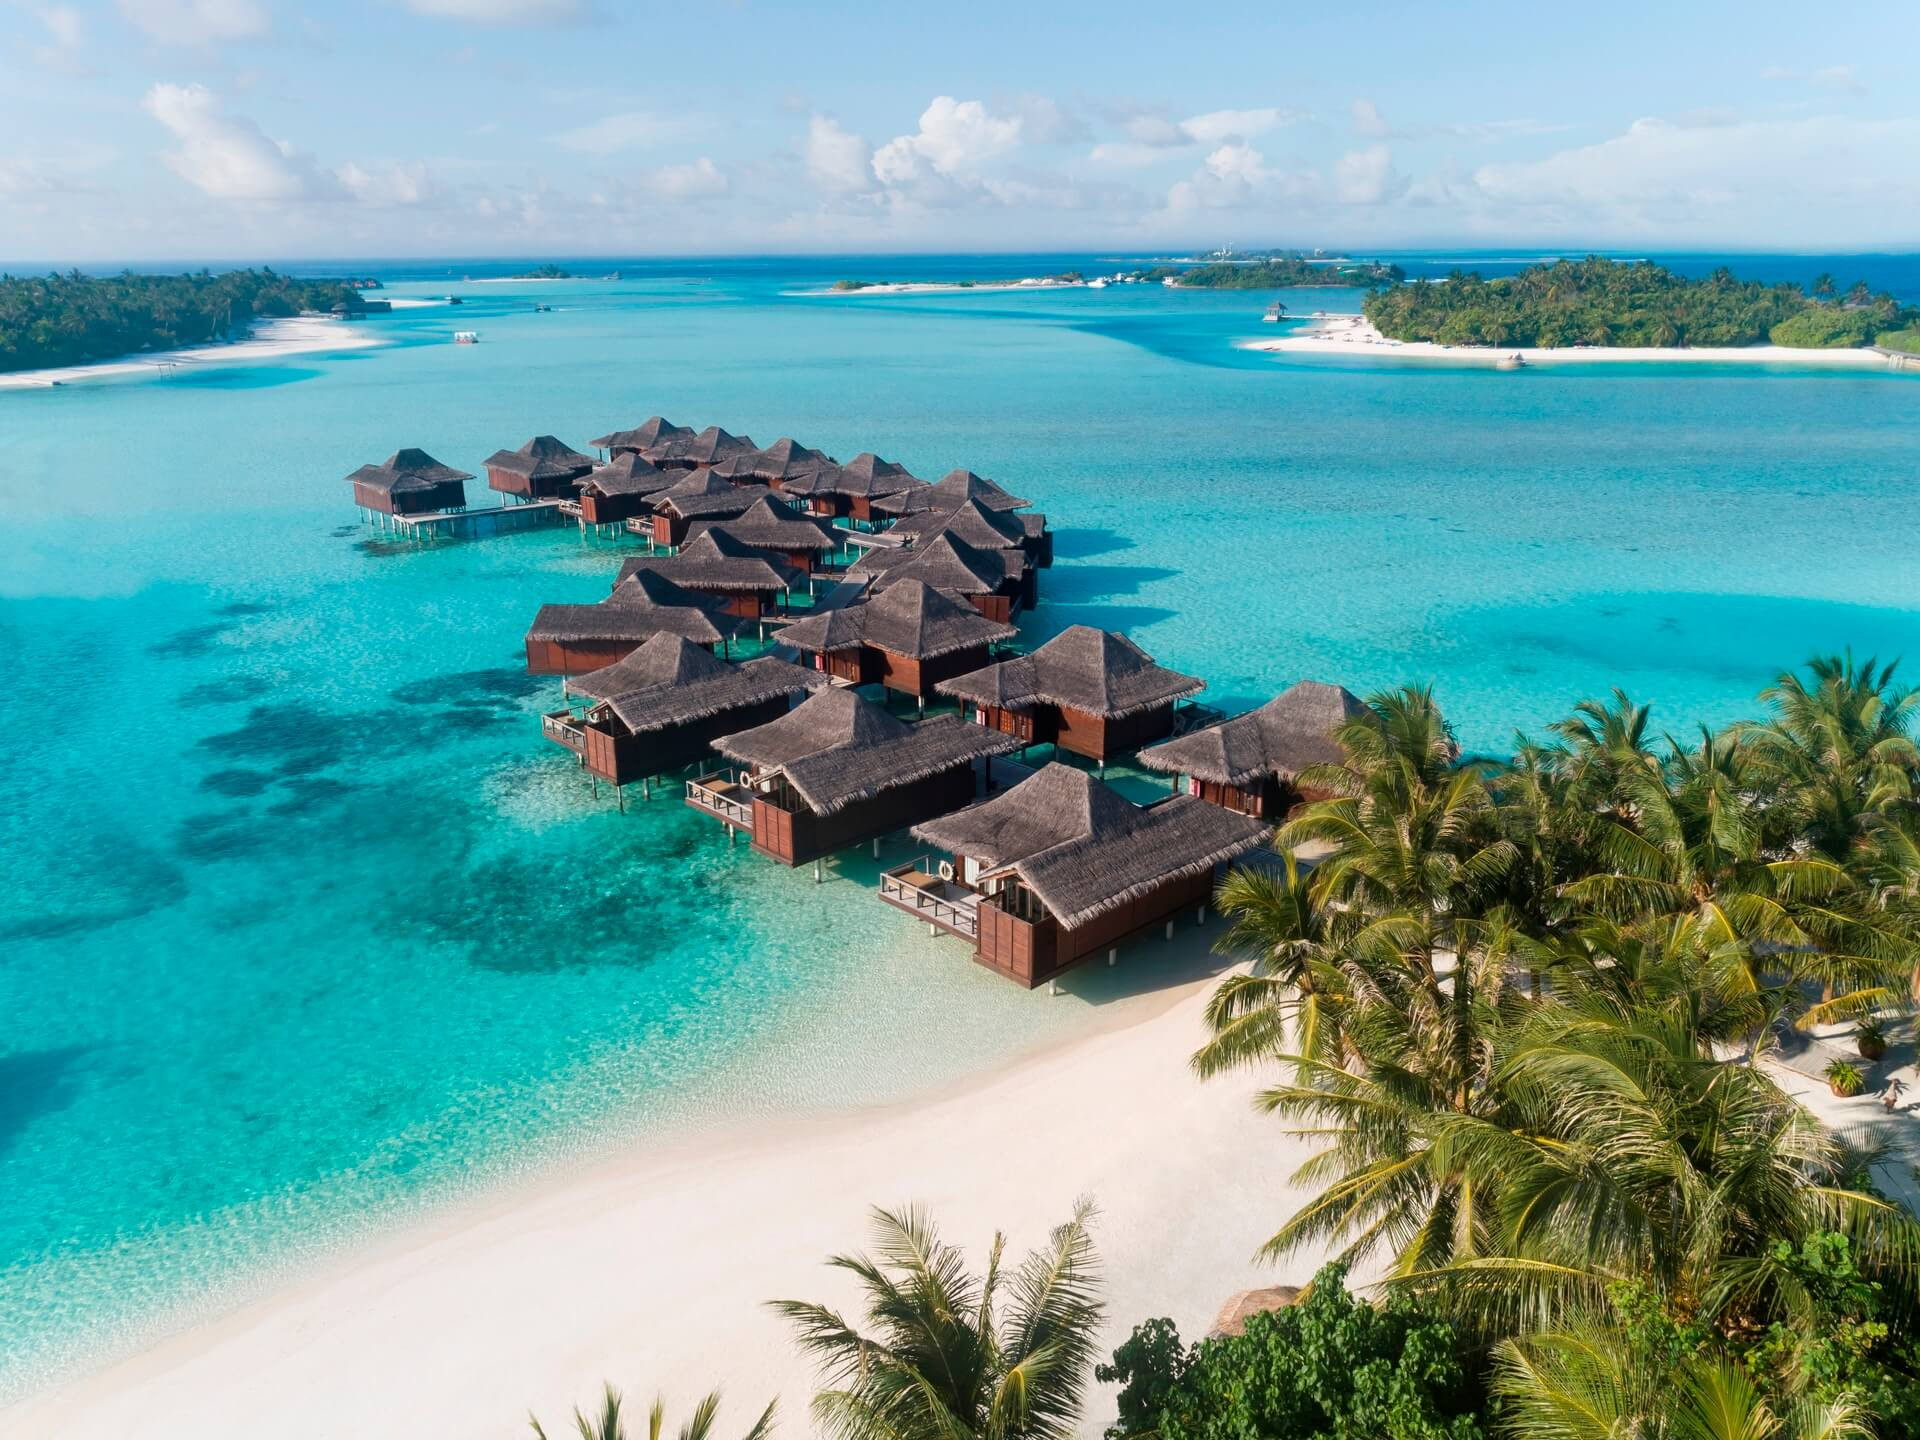 Minor Hotel Group Donates to Maldives